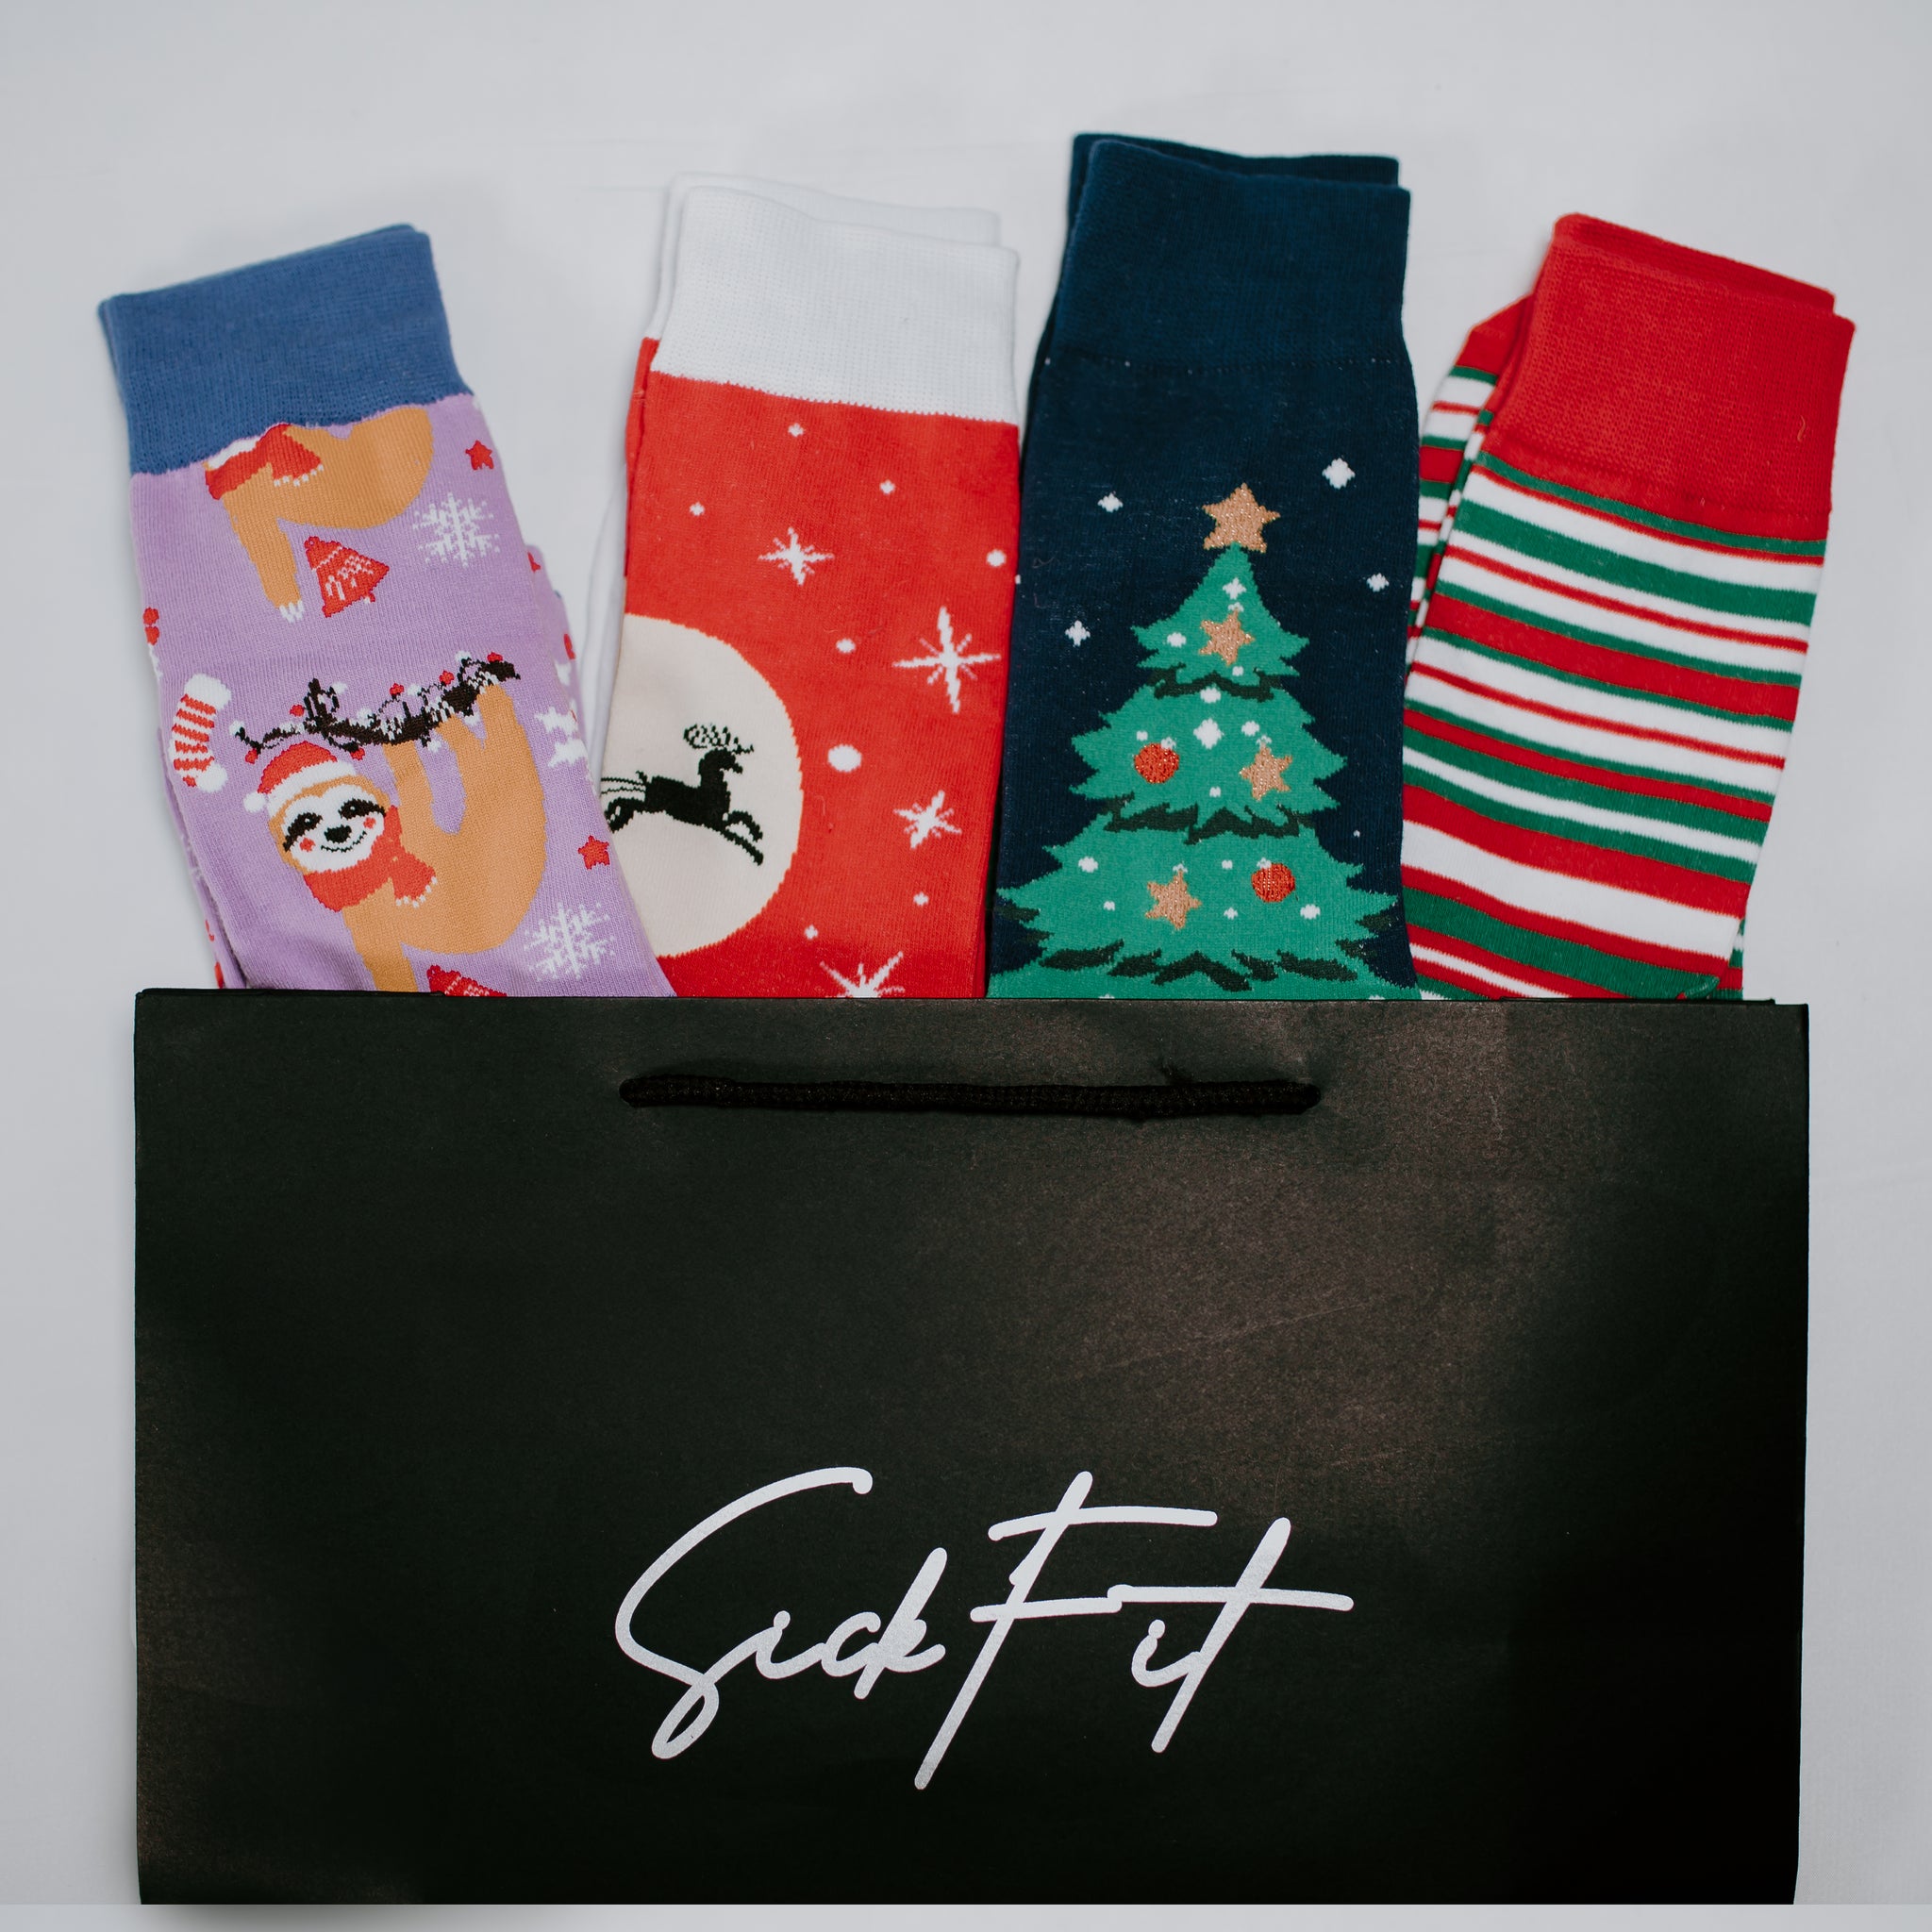 Wholesale Christmas Socks